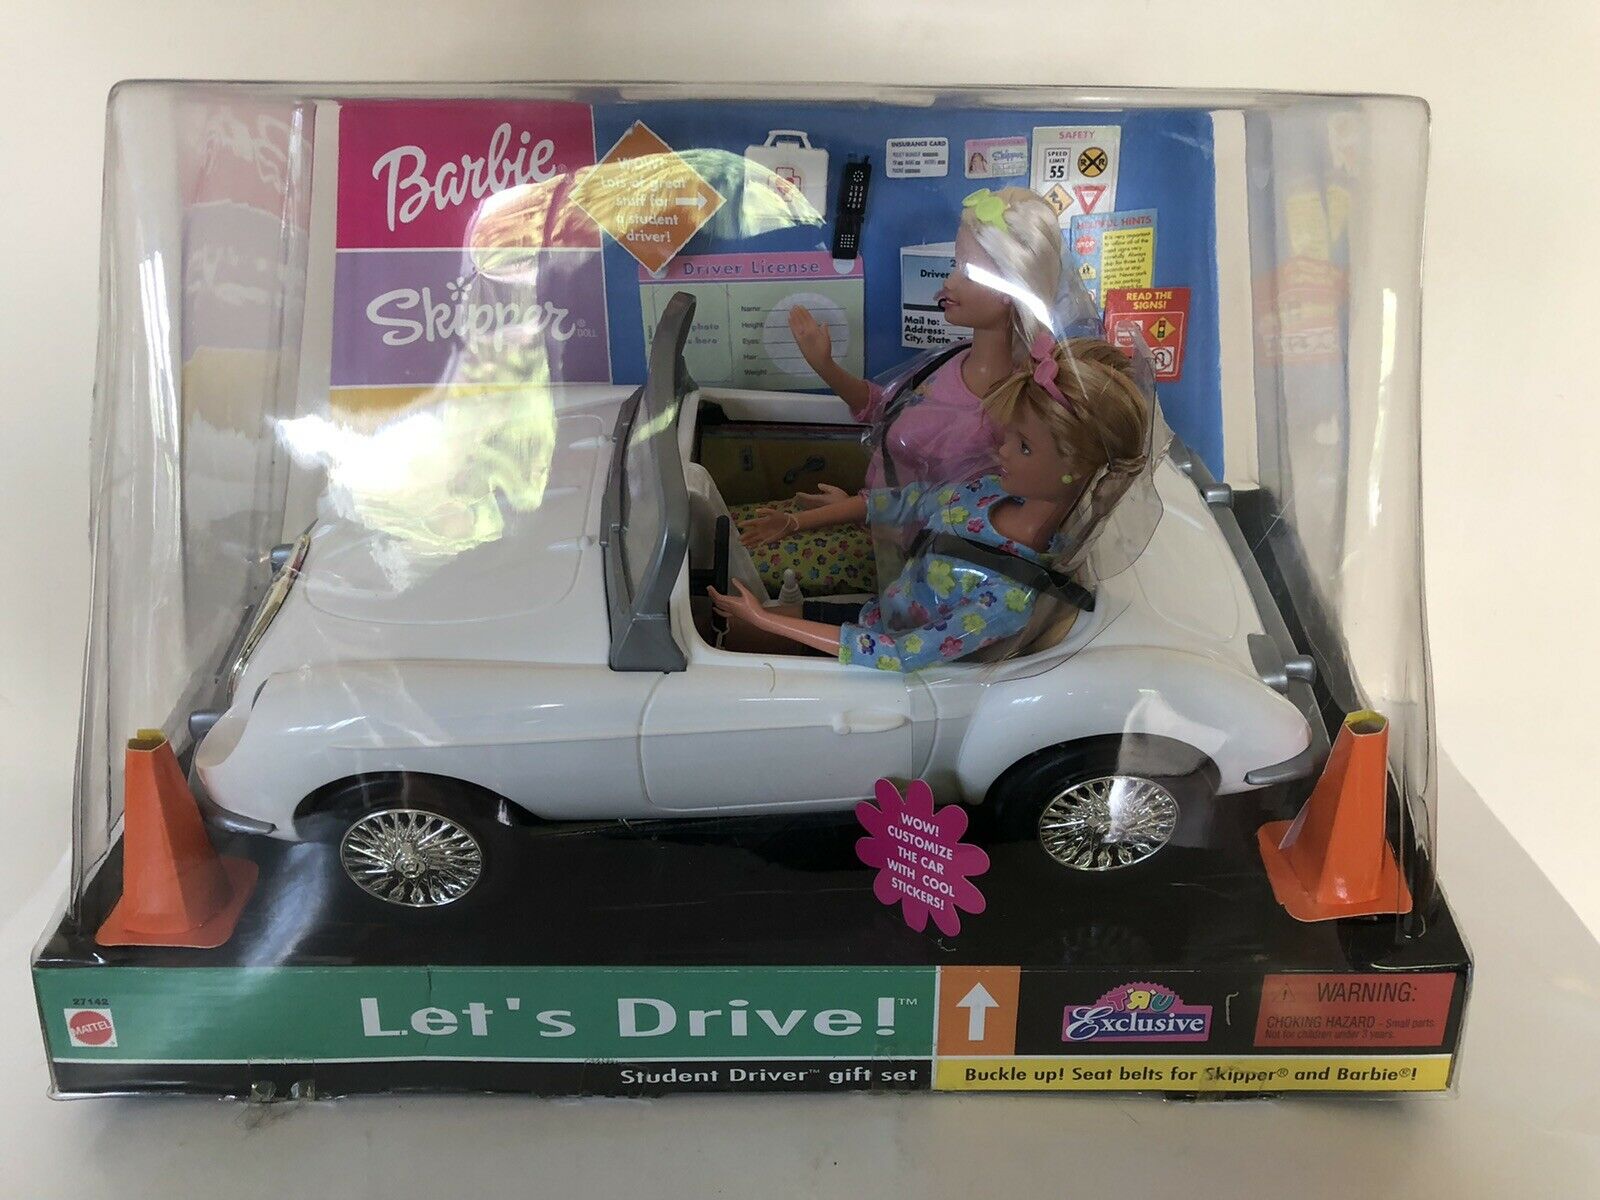 Let's Drive! Student Driver Barbie Doll Gift Set 2000 Toys R Us Mattel 27142 B20